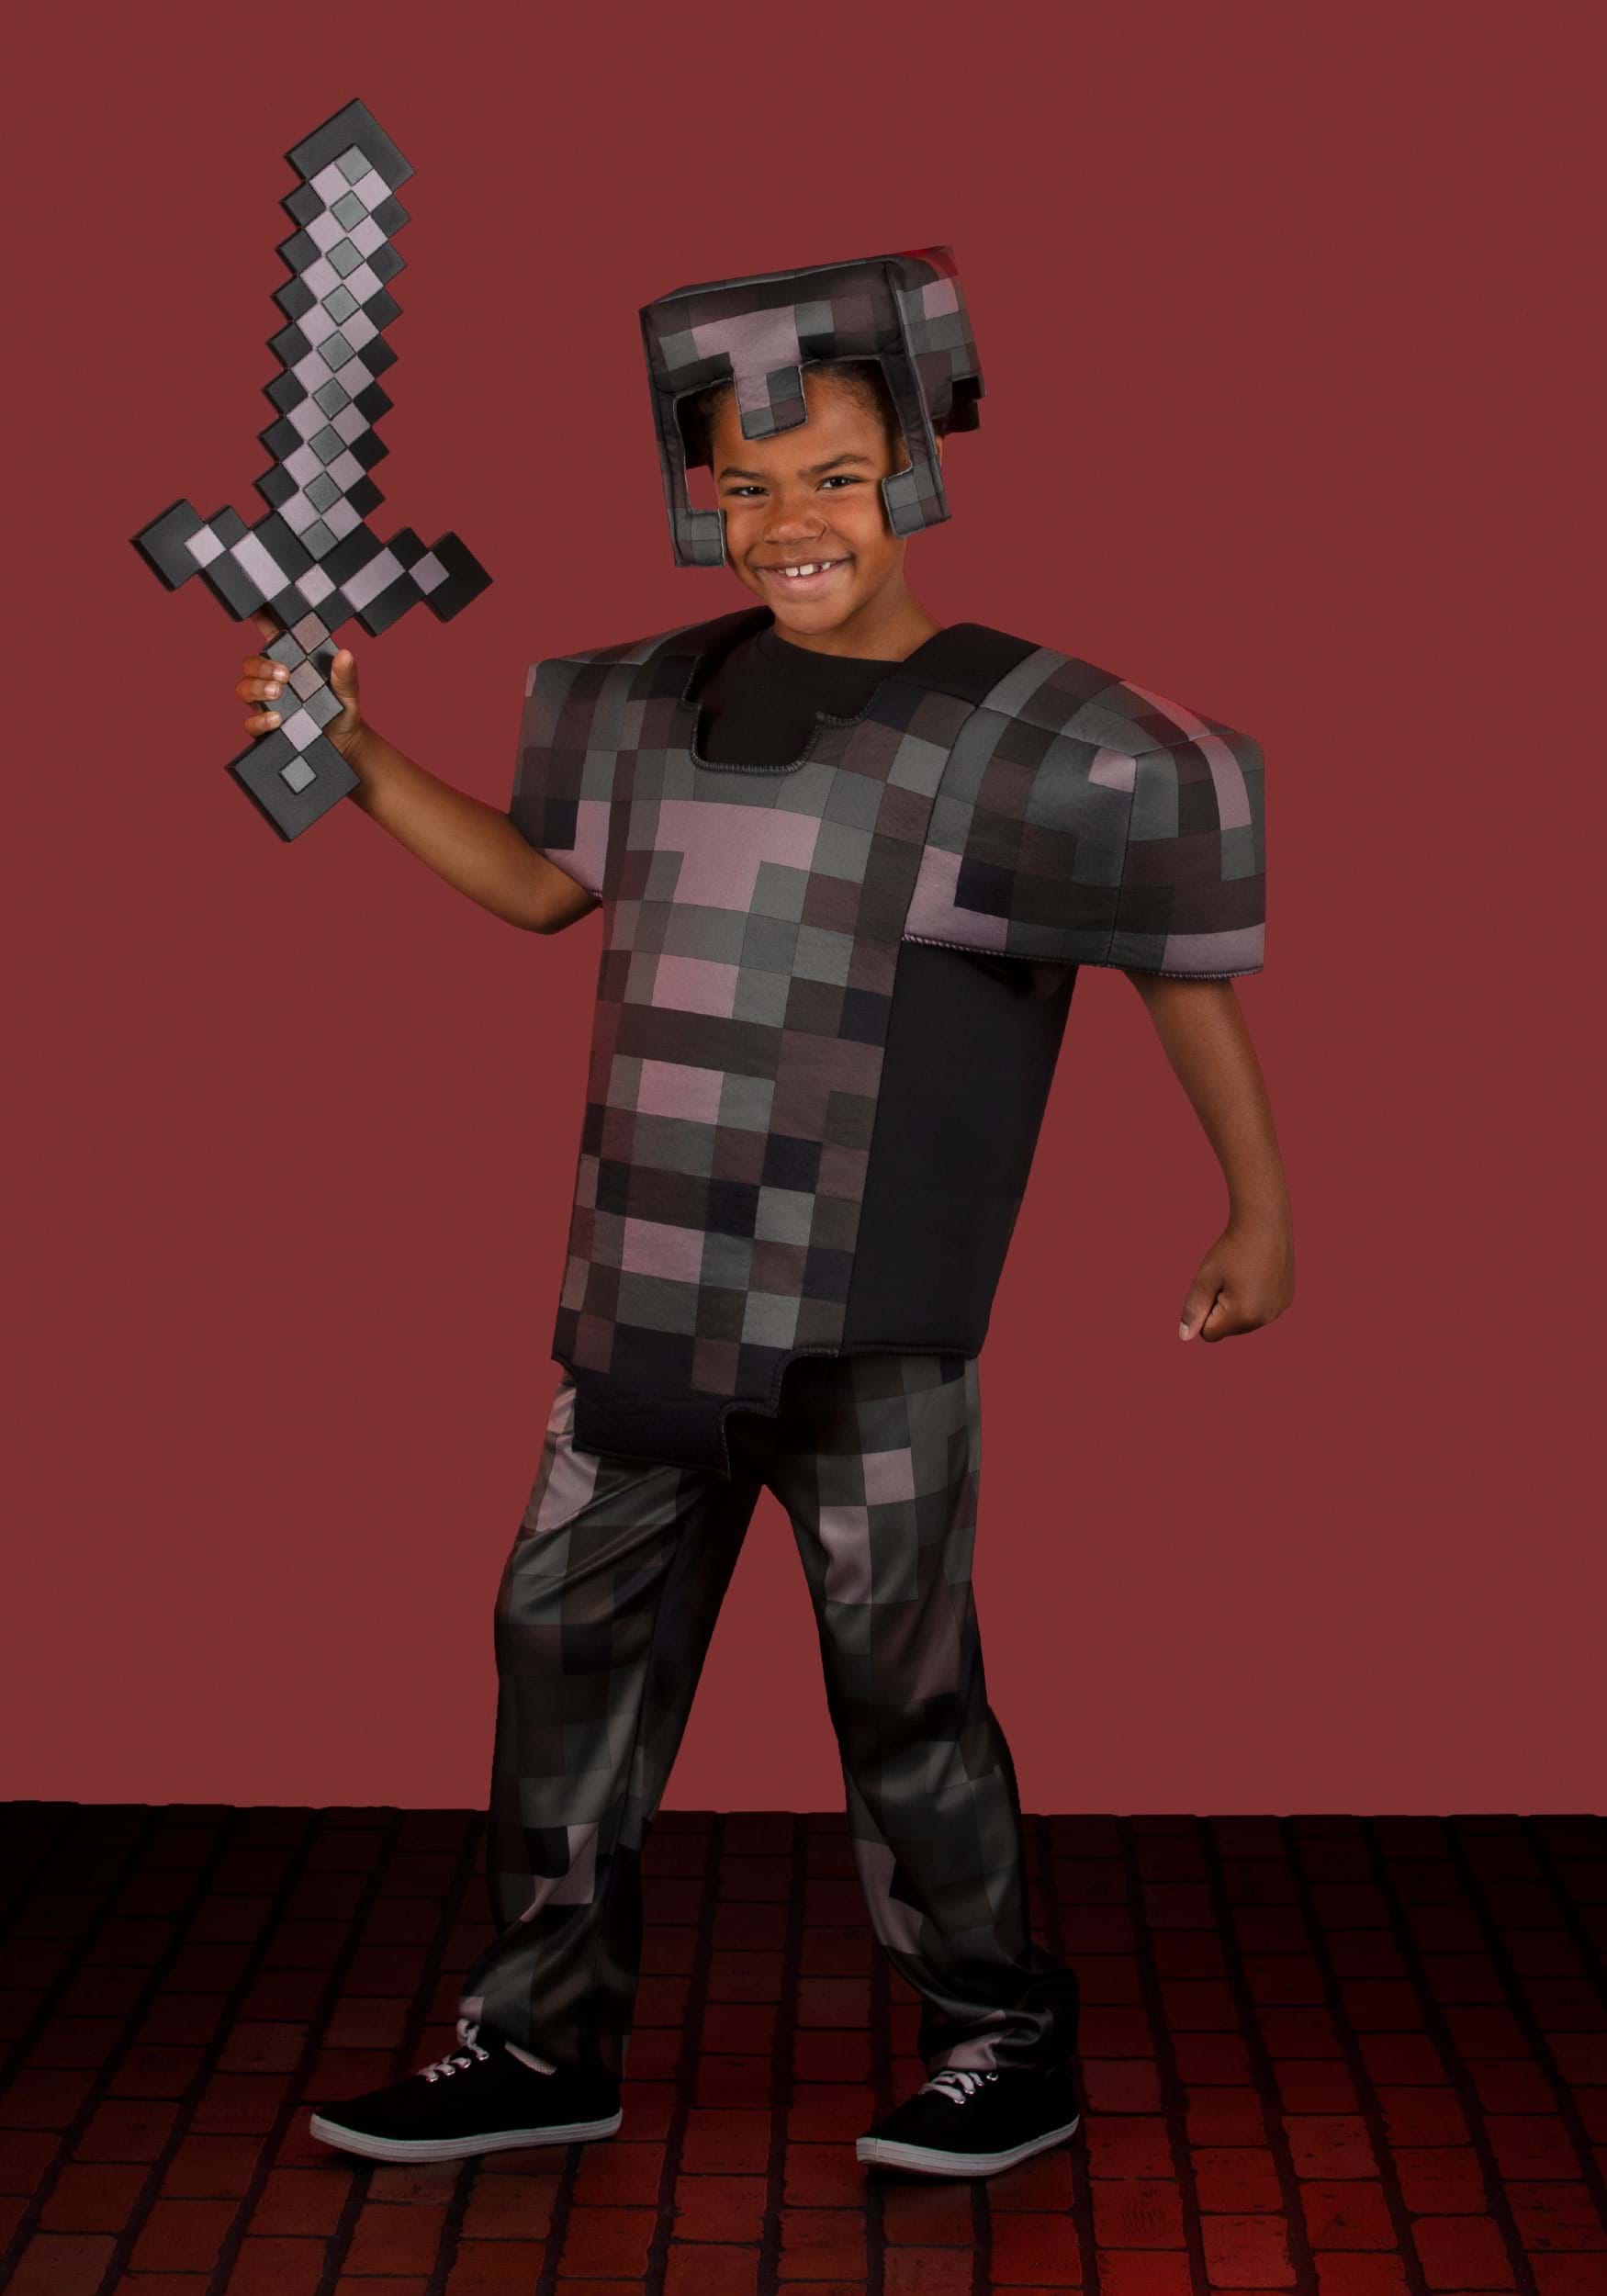 Minecraft Child Netherite Armor Deluxe Costume